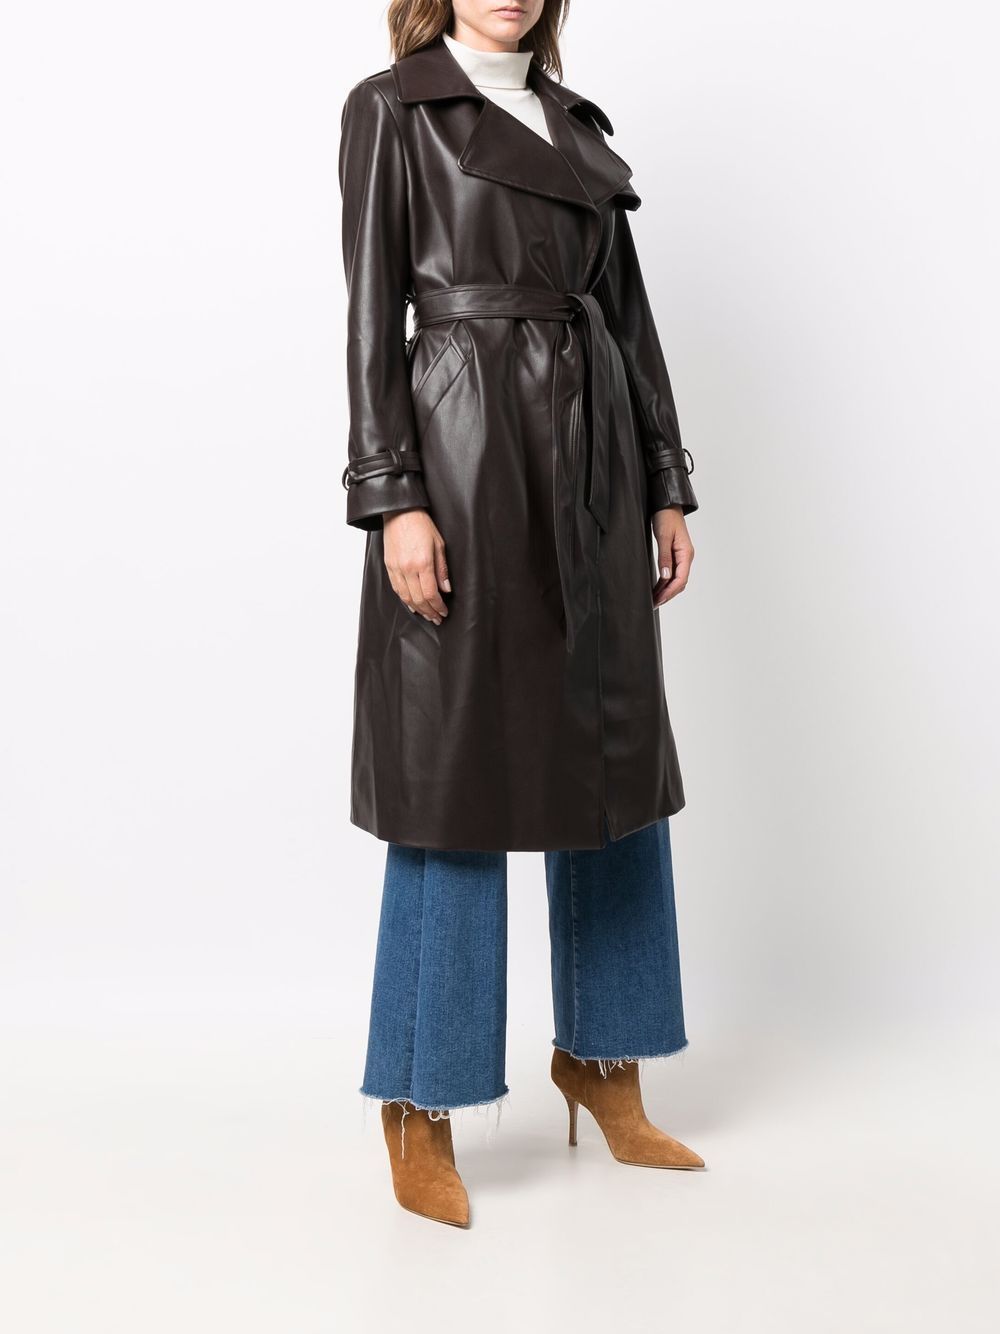 Blanca Vita leather-look Trench Coat - Farfetch